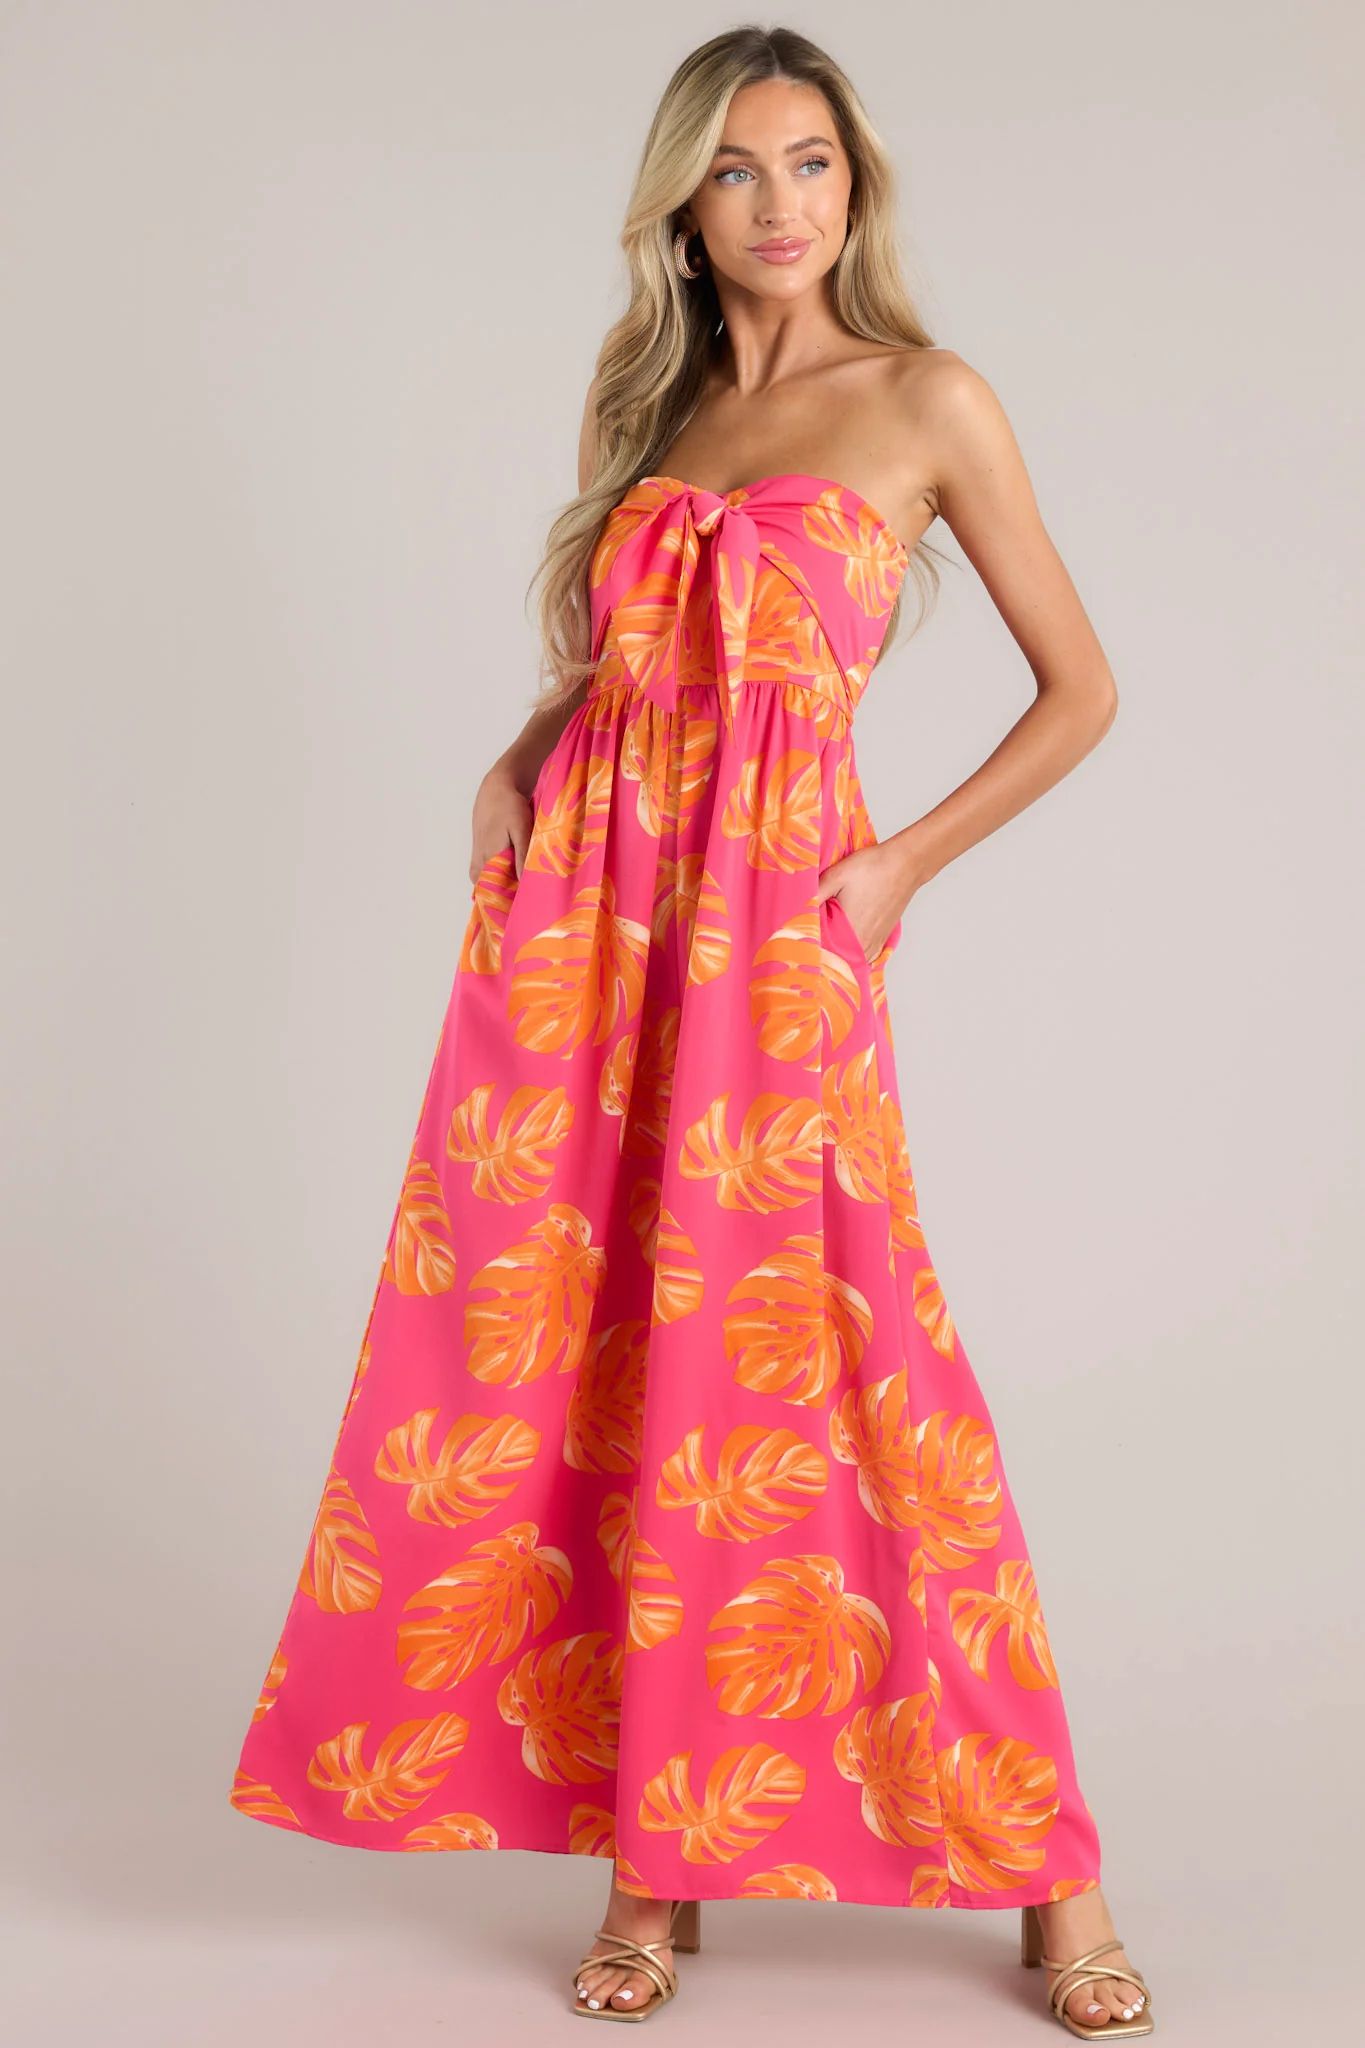 Beach Bliss Hot Pink & Orange Tropical Print Strapless Jumpsuit | Red Dress